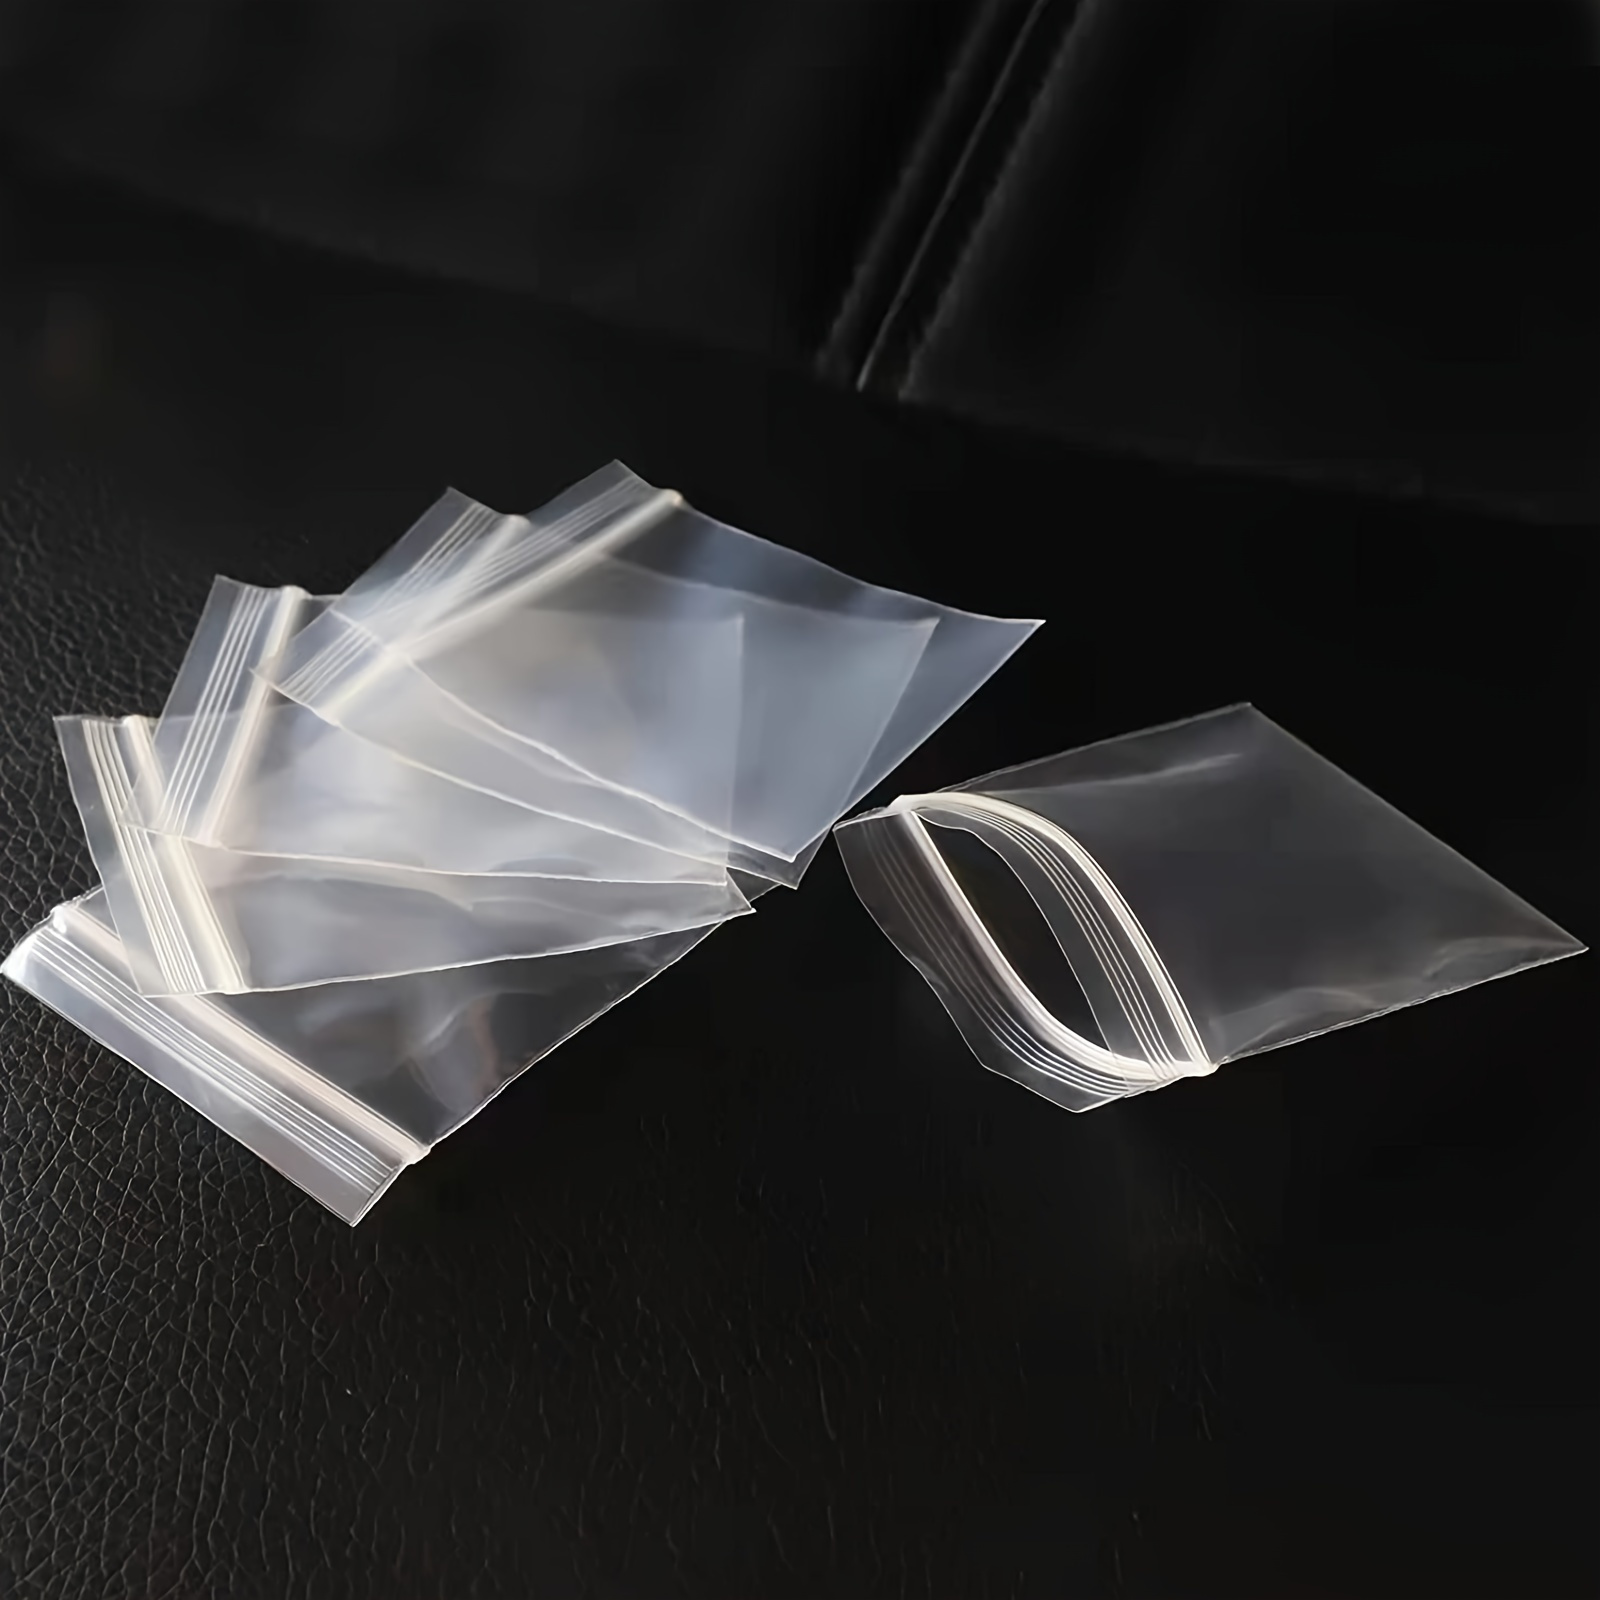 8x10 Plastic Resealable Bags w/ Writing Block Clear Zip Lock 2 Mil